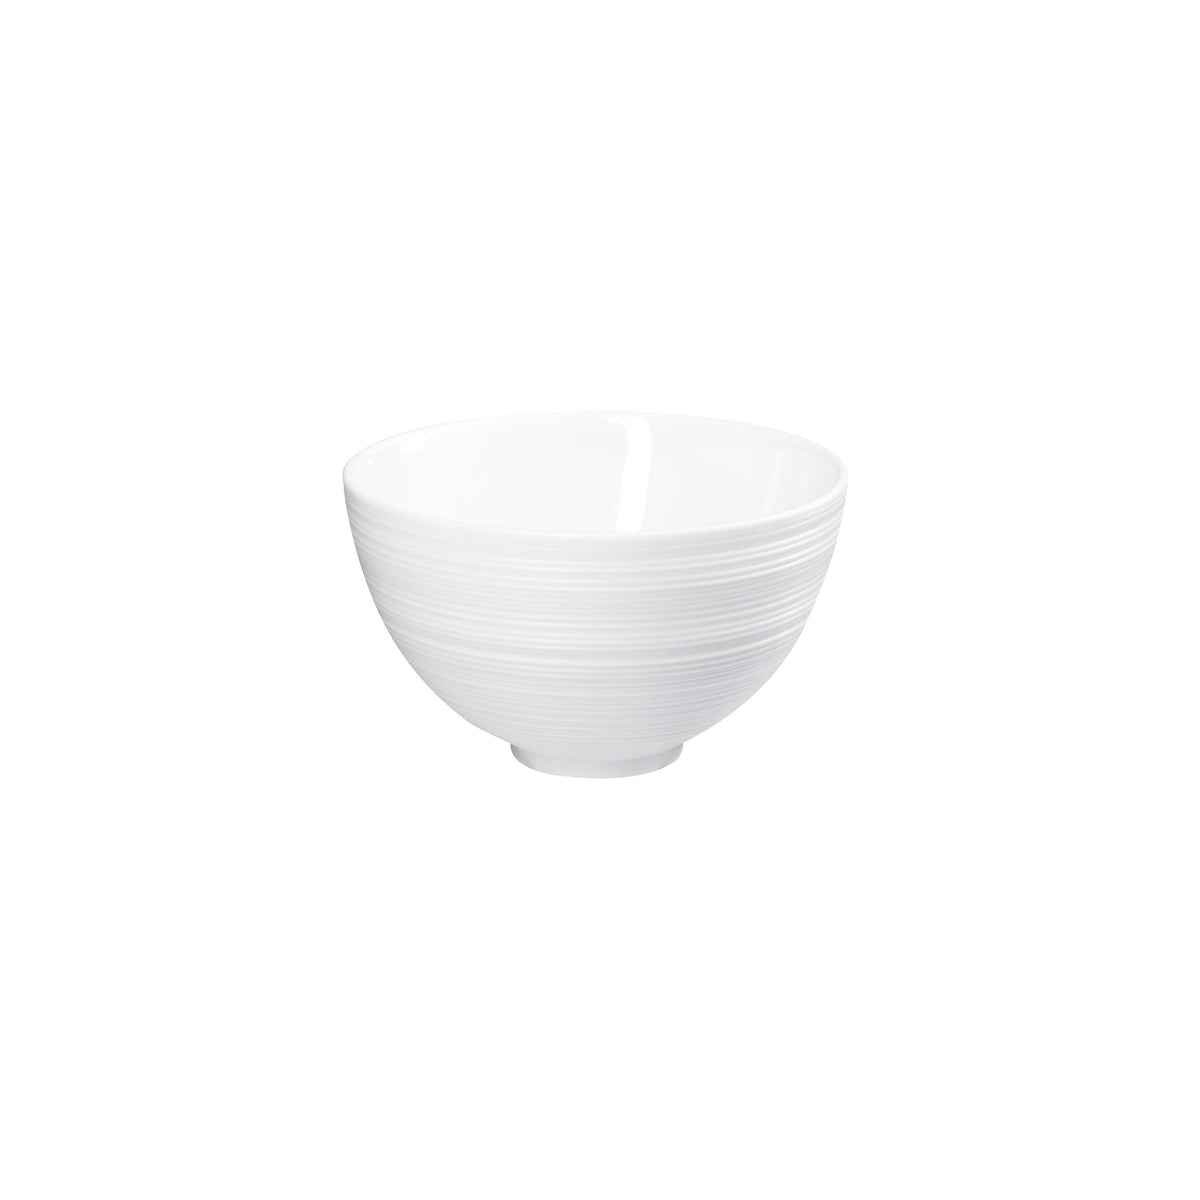 HEMISPHERE White Satin - Rice bowl